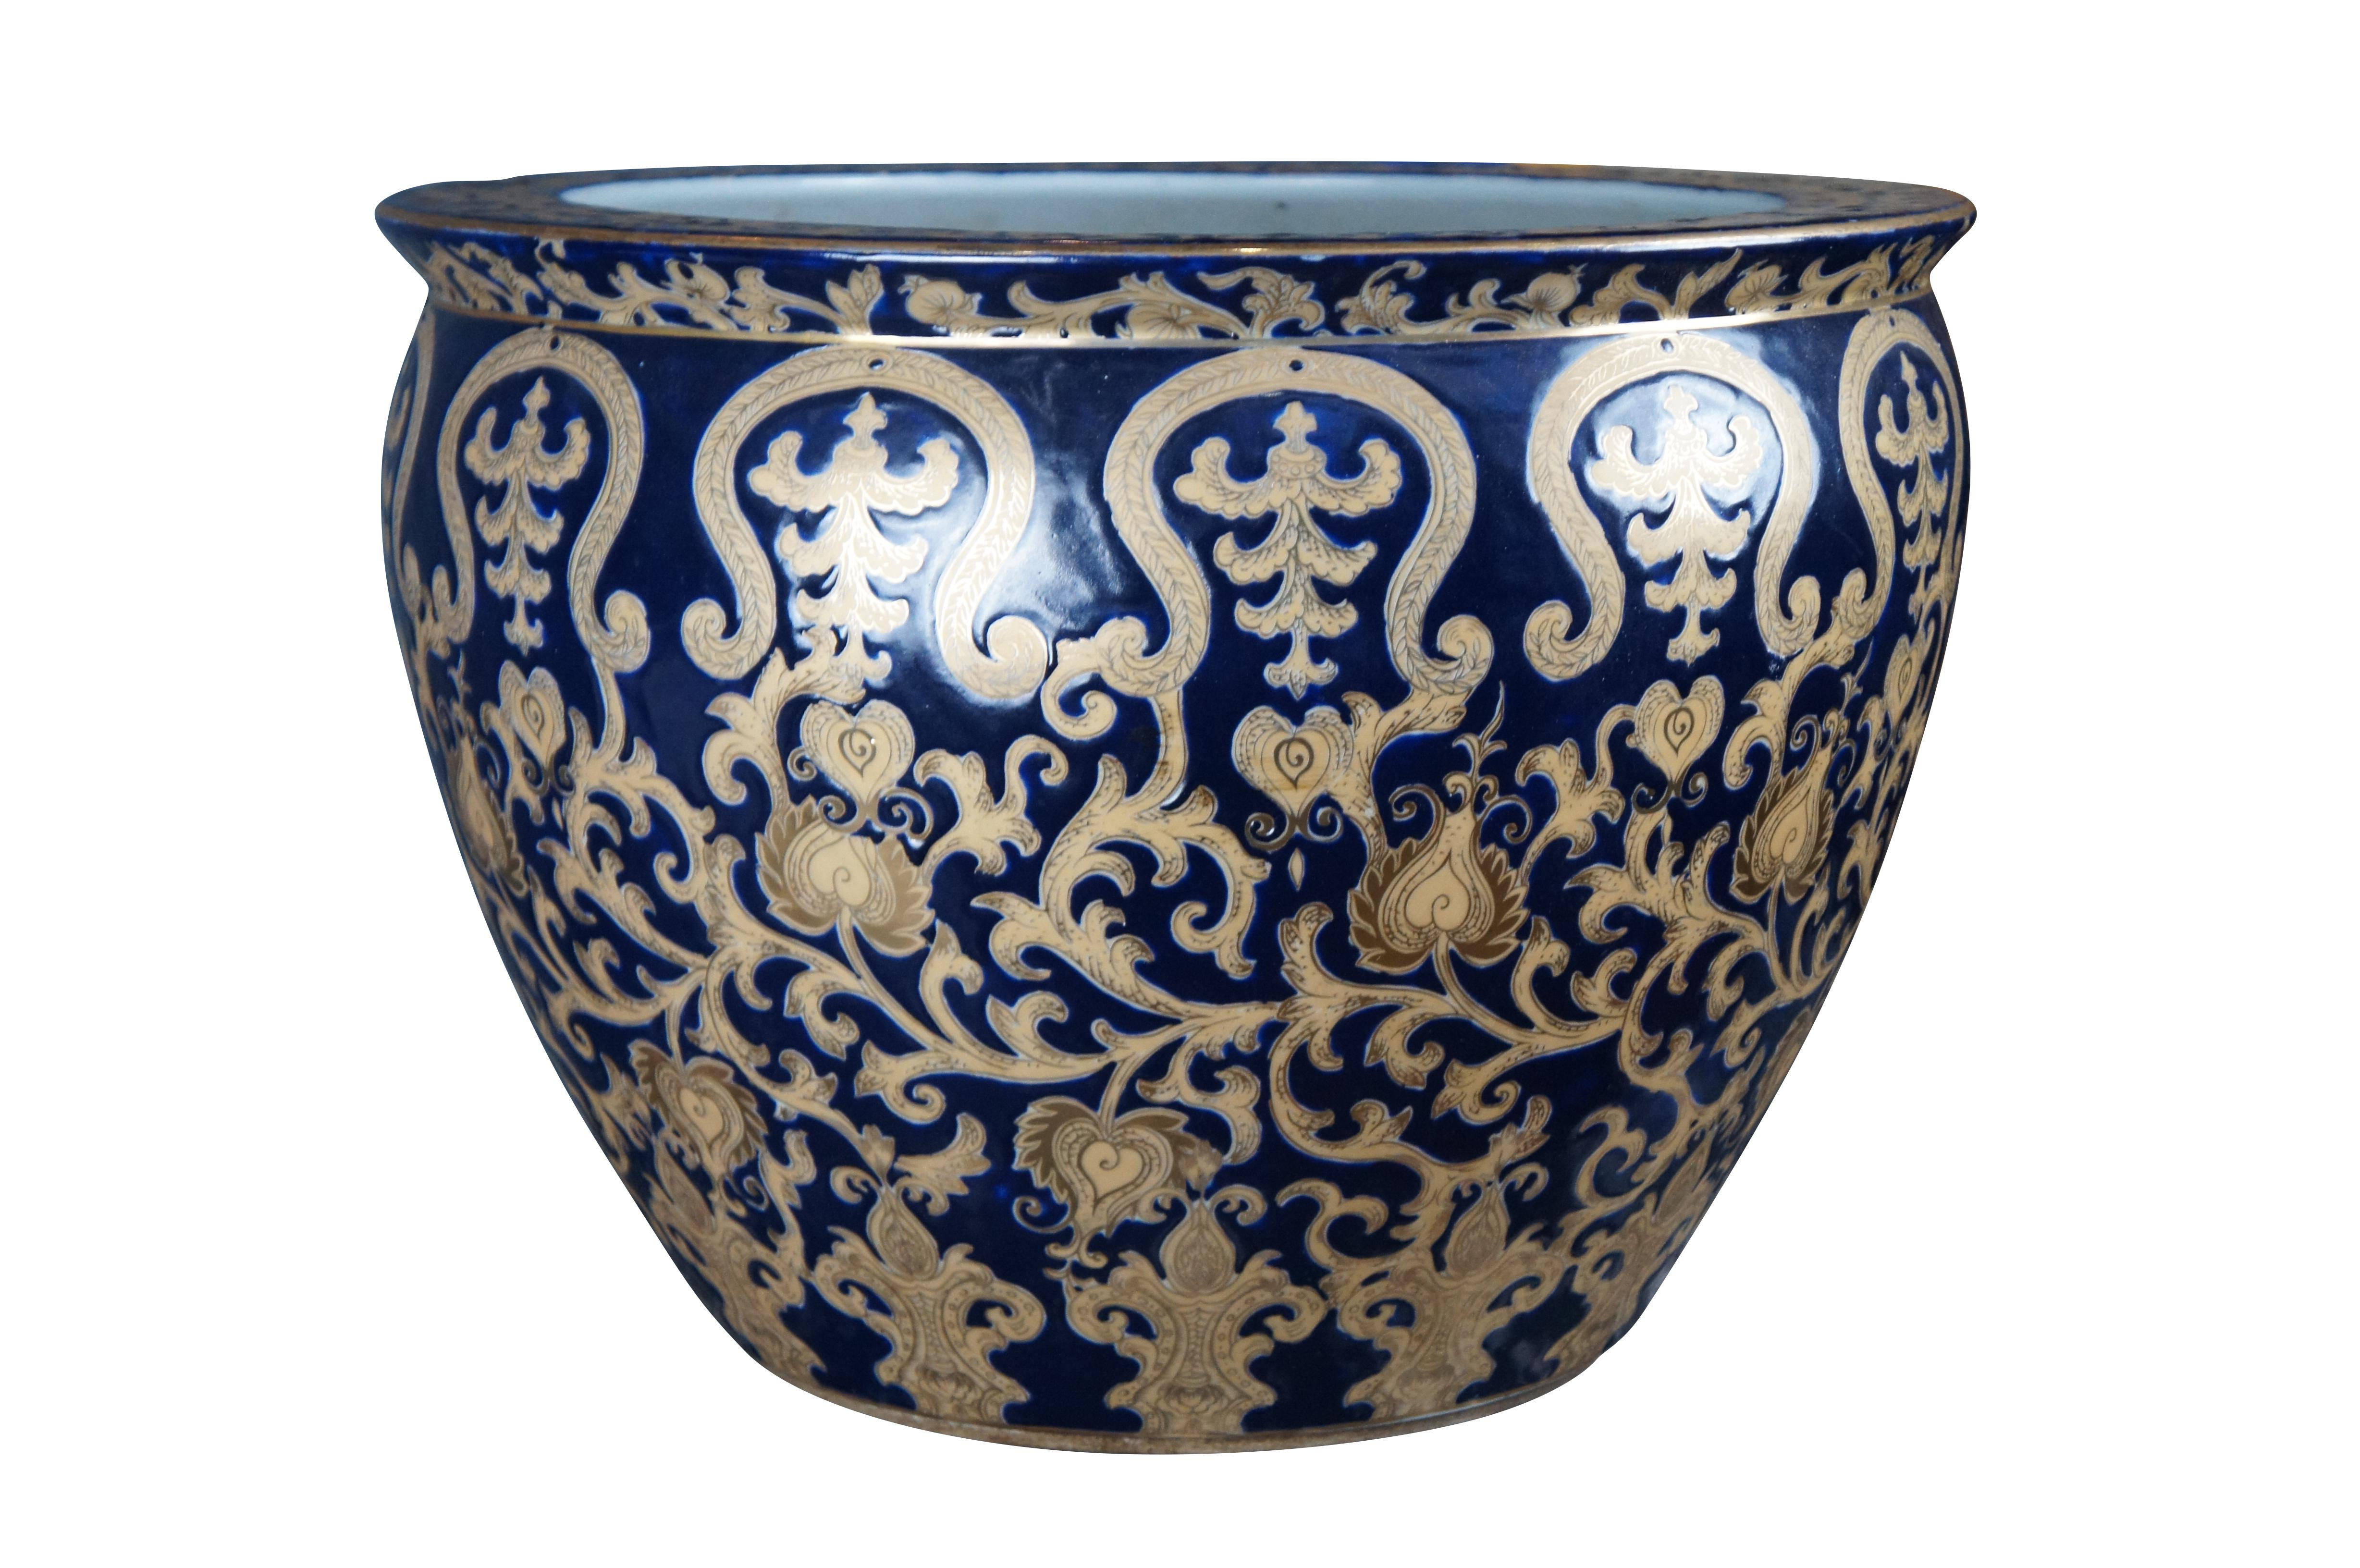 Chinoiserie Chinese Porcelain Blue & 24 Karet Gold Enameled Koi Fish Bowl Planter Jardiniere